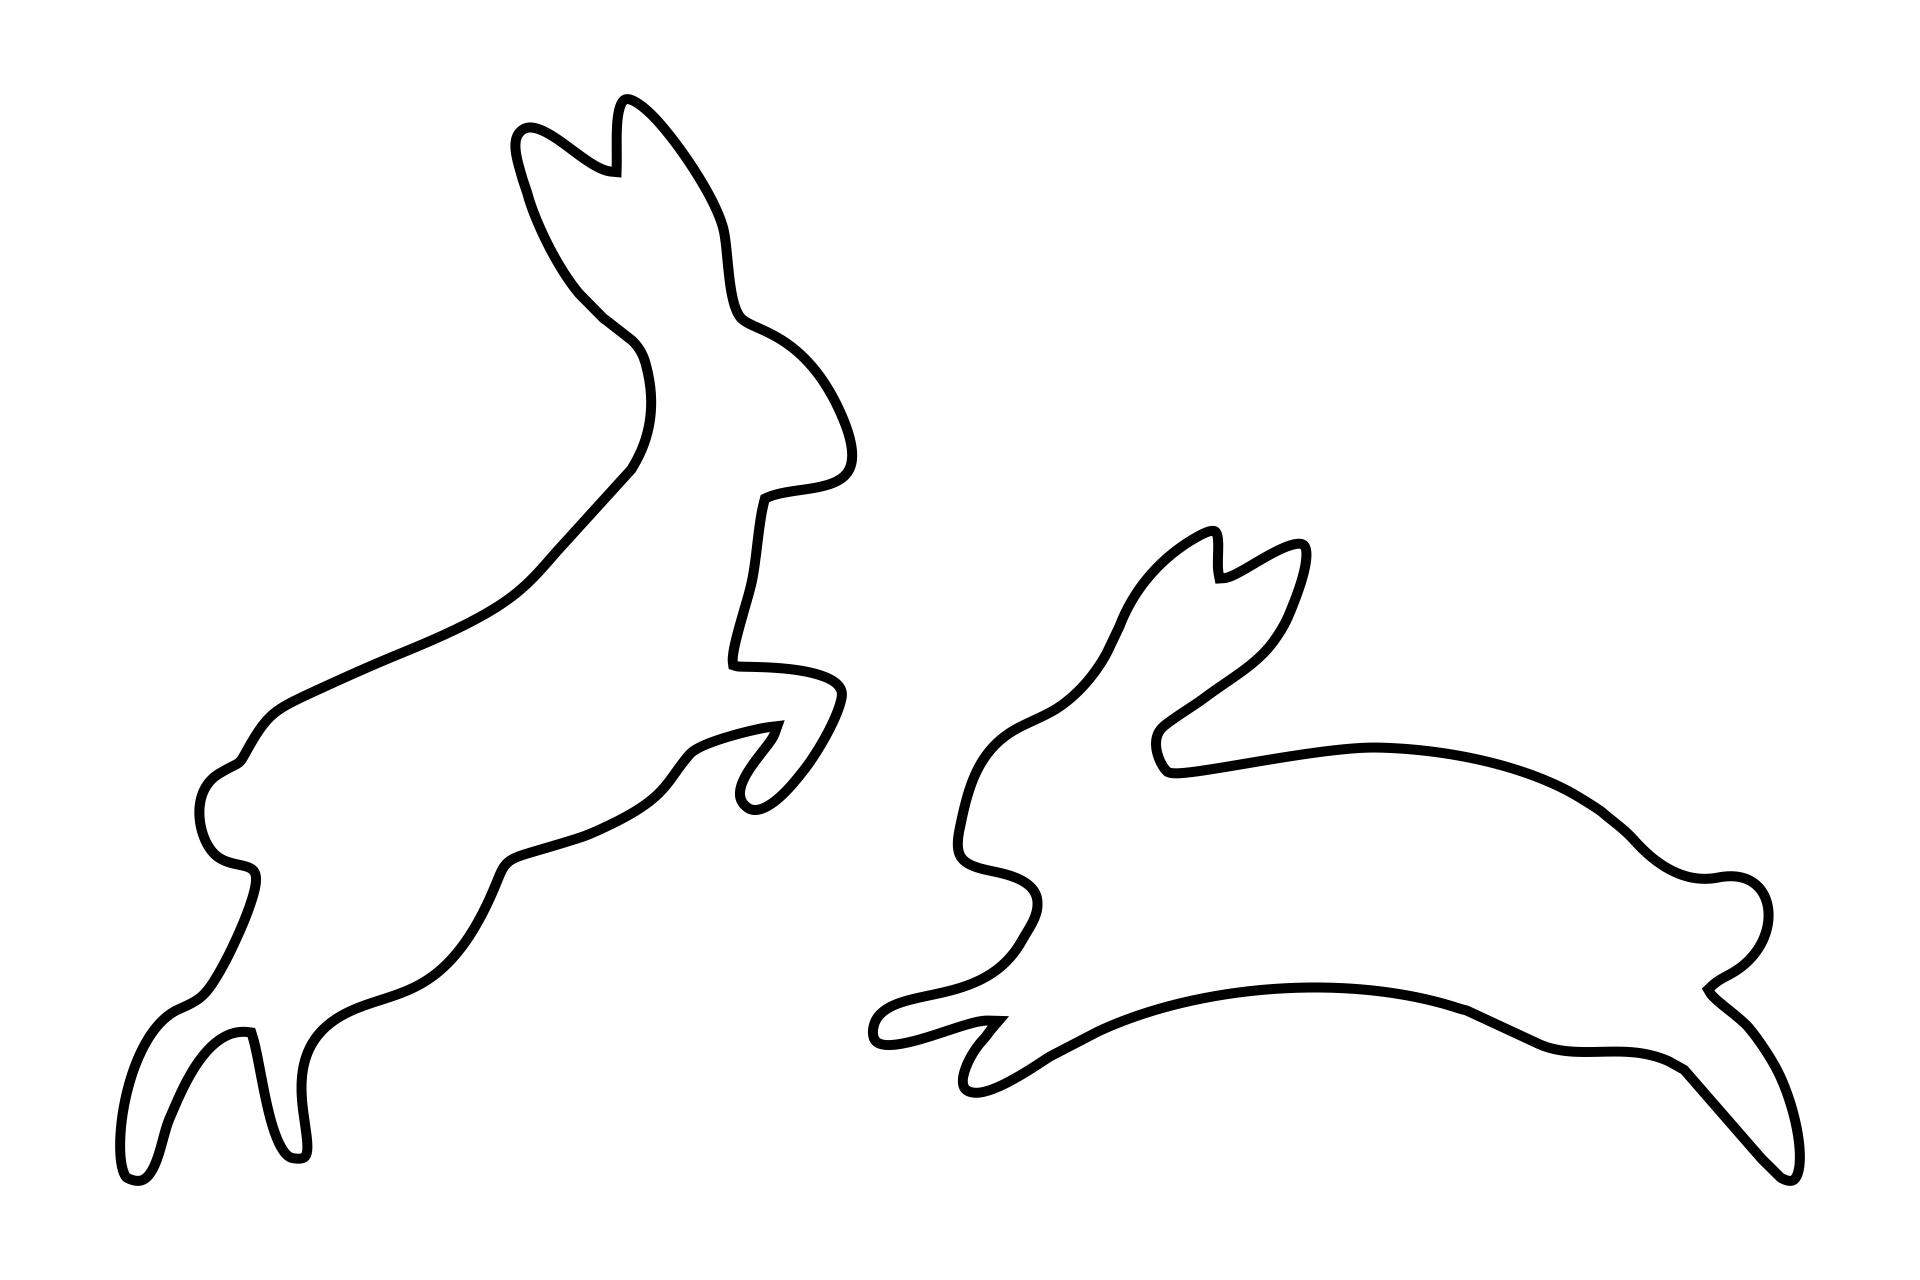 Bunny Rabbit Template